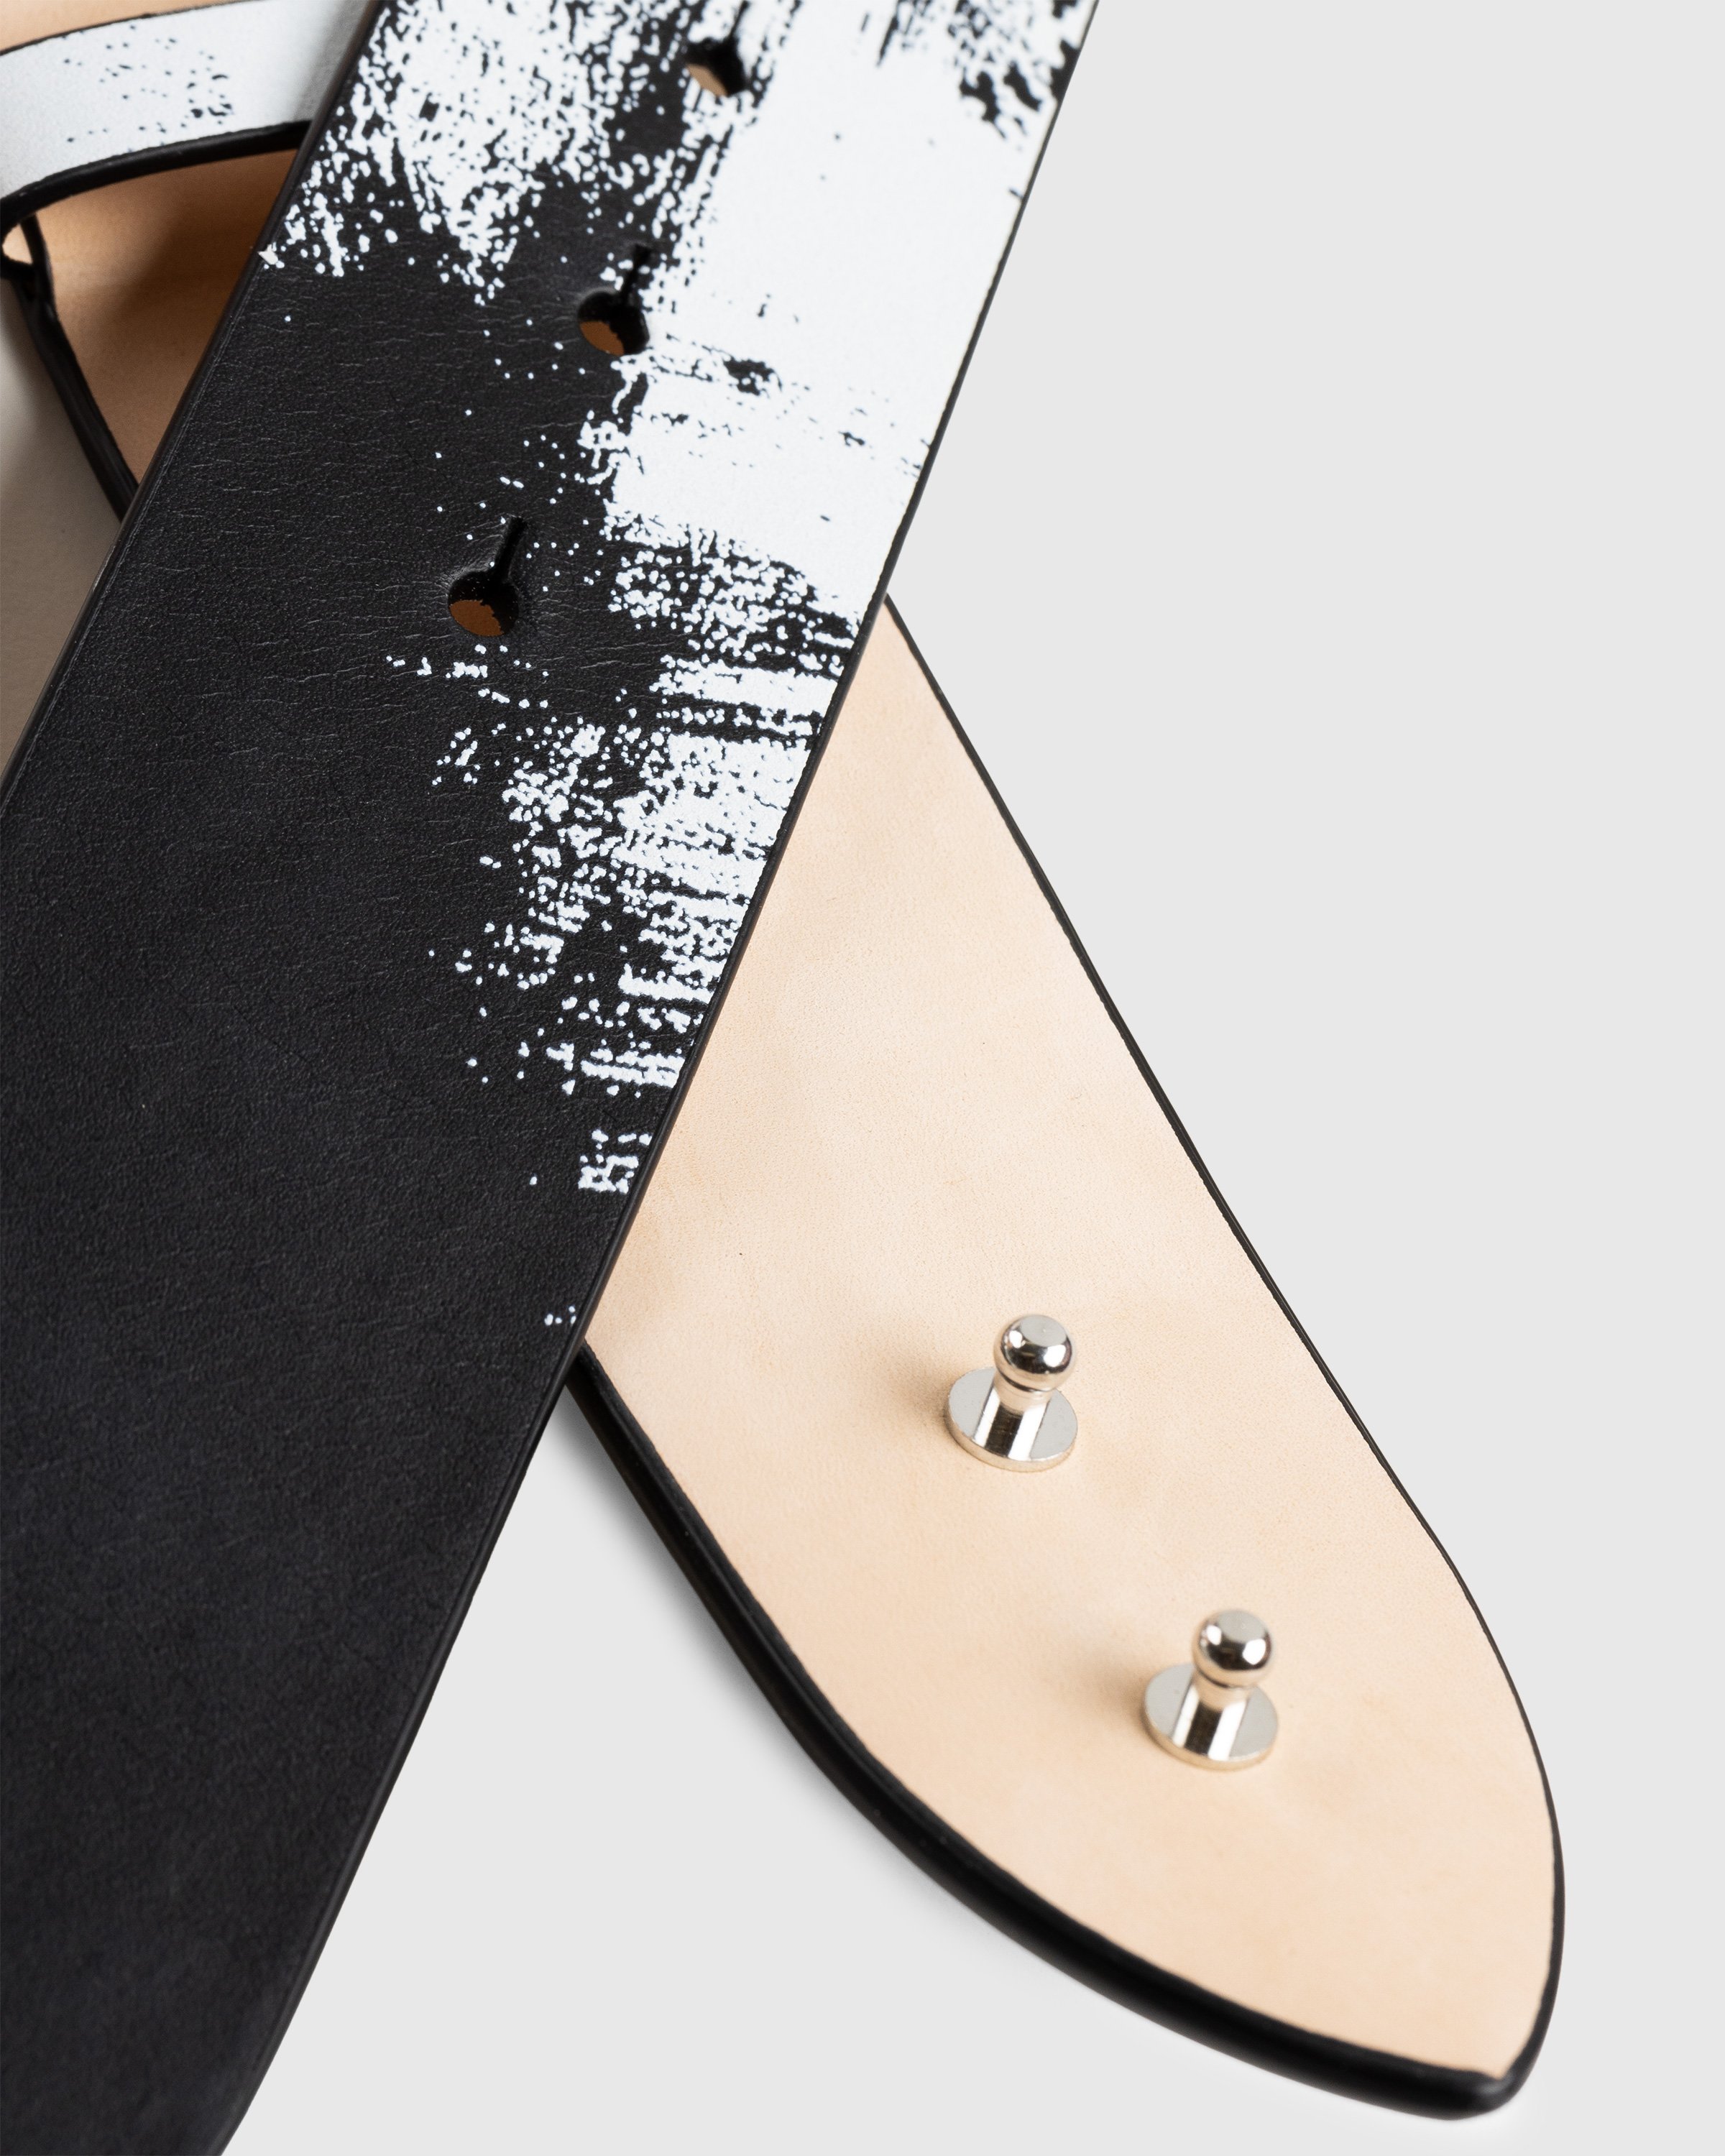 Maison Margiela - Distressed Leather Belt Black - Accessories - Black - Image 2